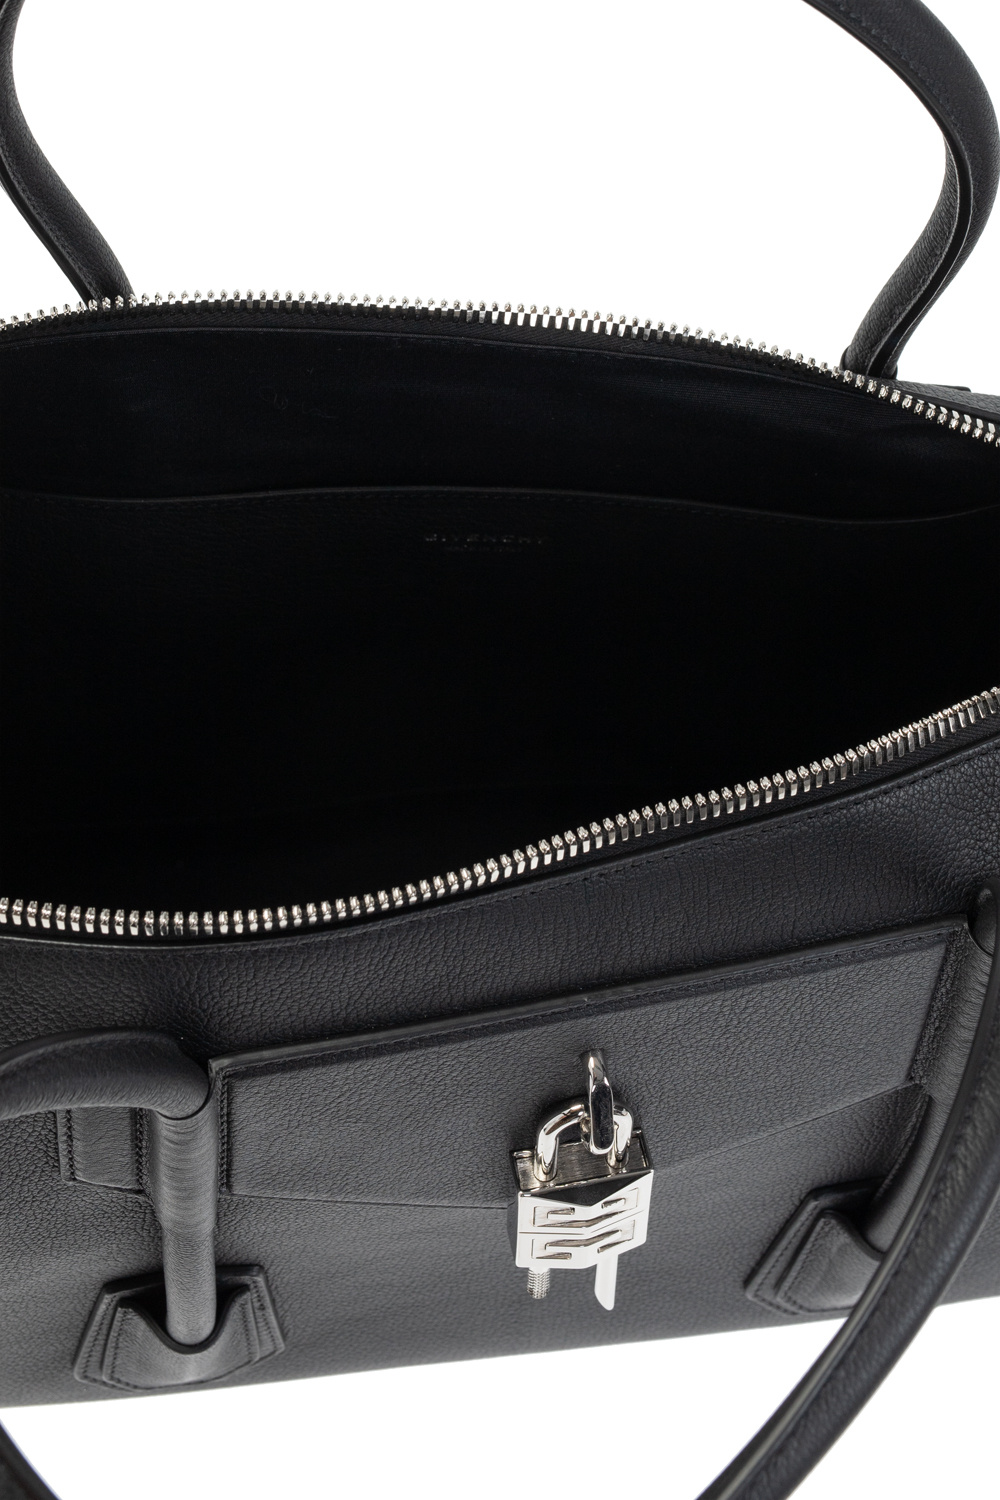 Givenchy ‘Antigona Soft Medium’ holdall bag